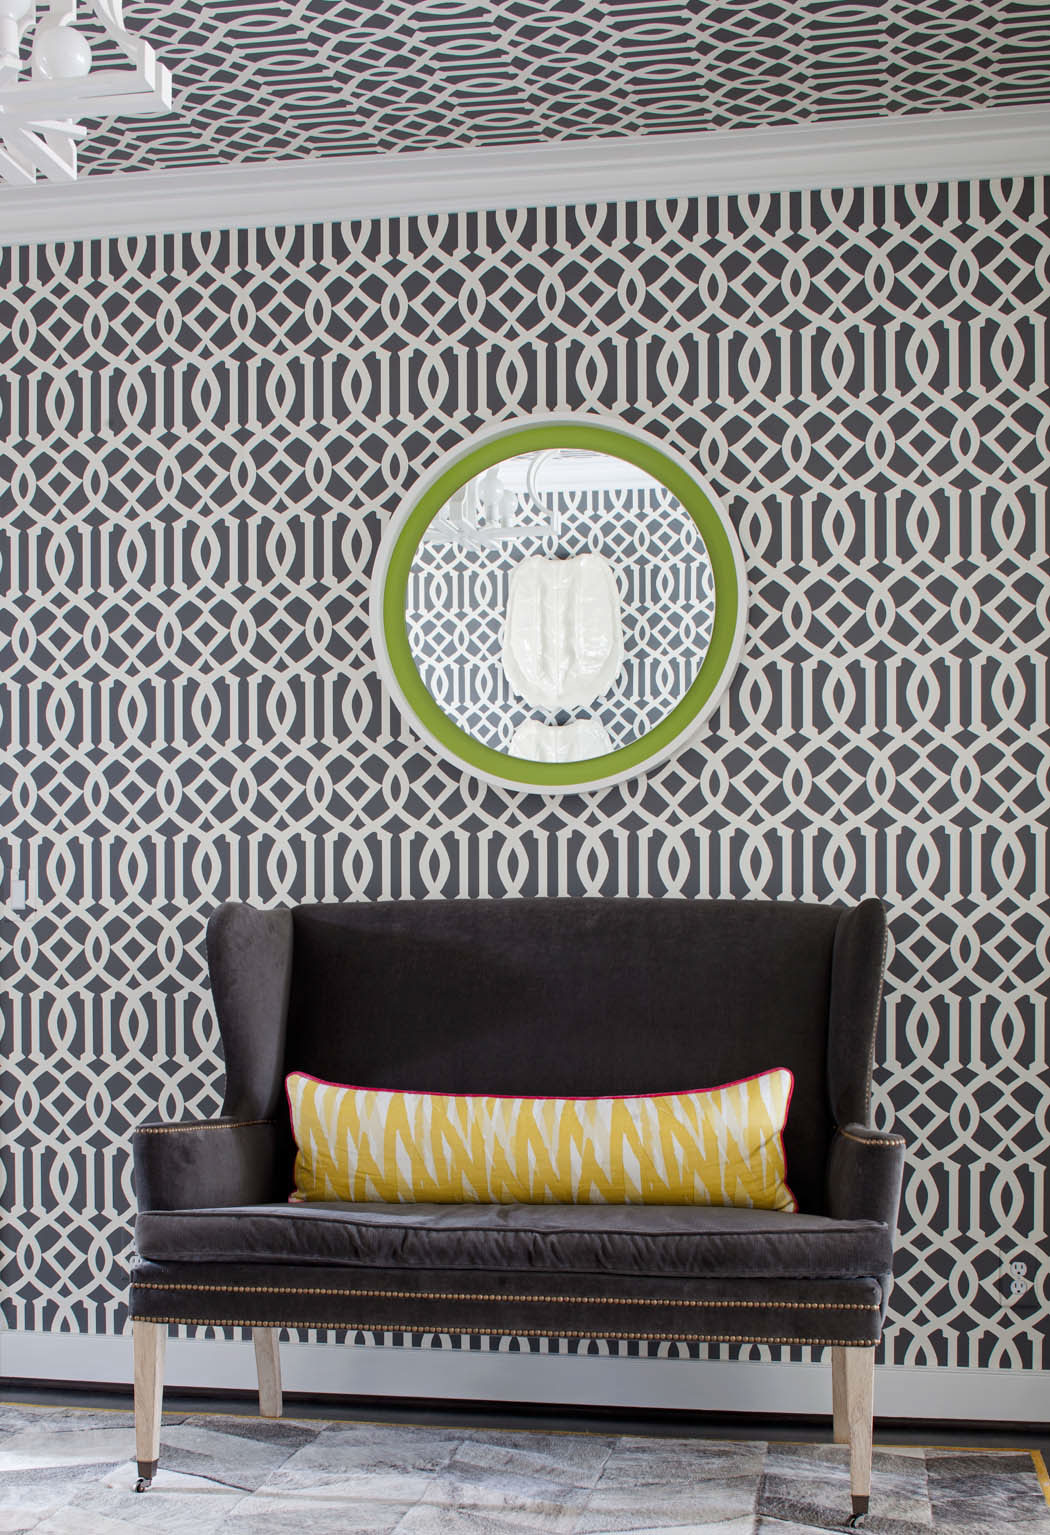 foyer  wallpaper  graphics black and white  interiors  modern fresh bold colors rethink RETHINK DESIGN STUDIO JOEL SNAYD Savannah  architecture interiors wallcoverings